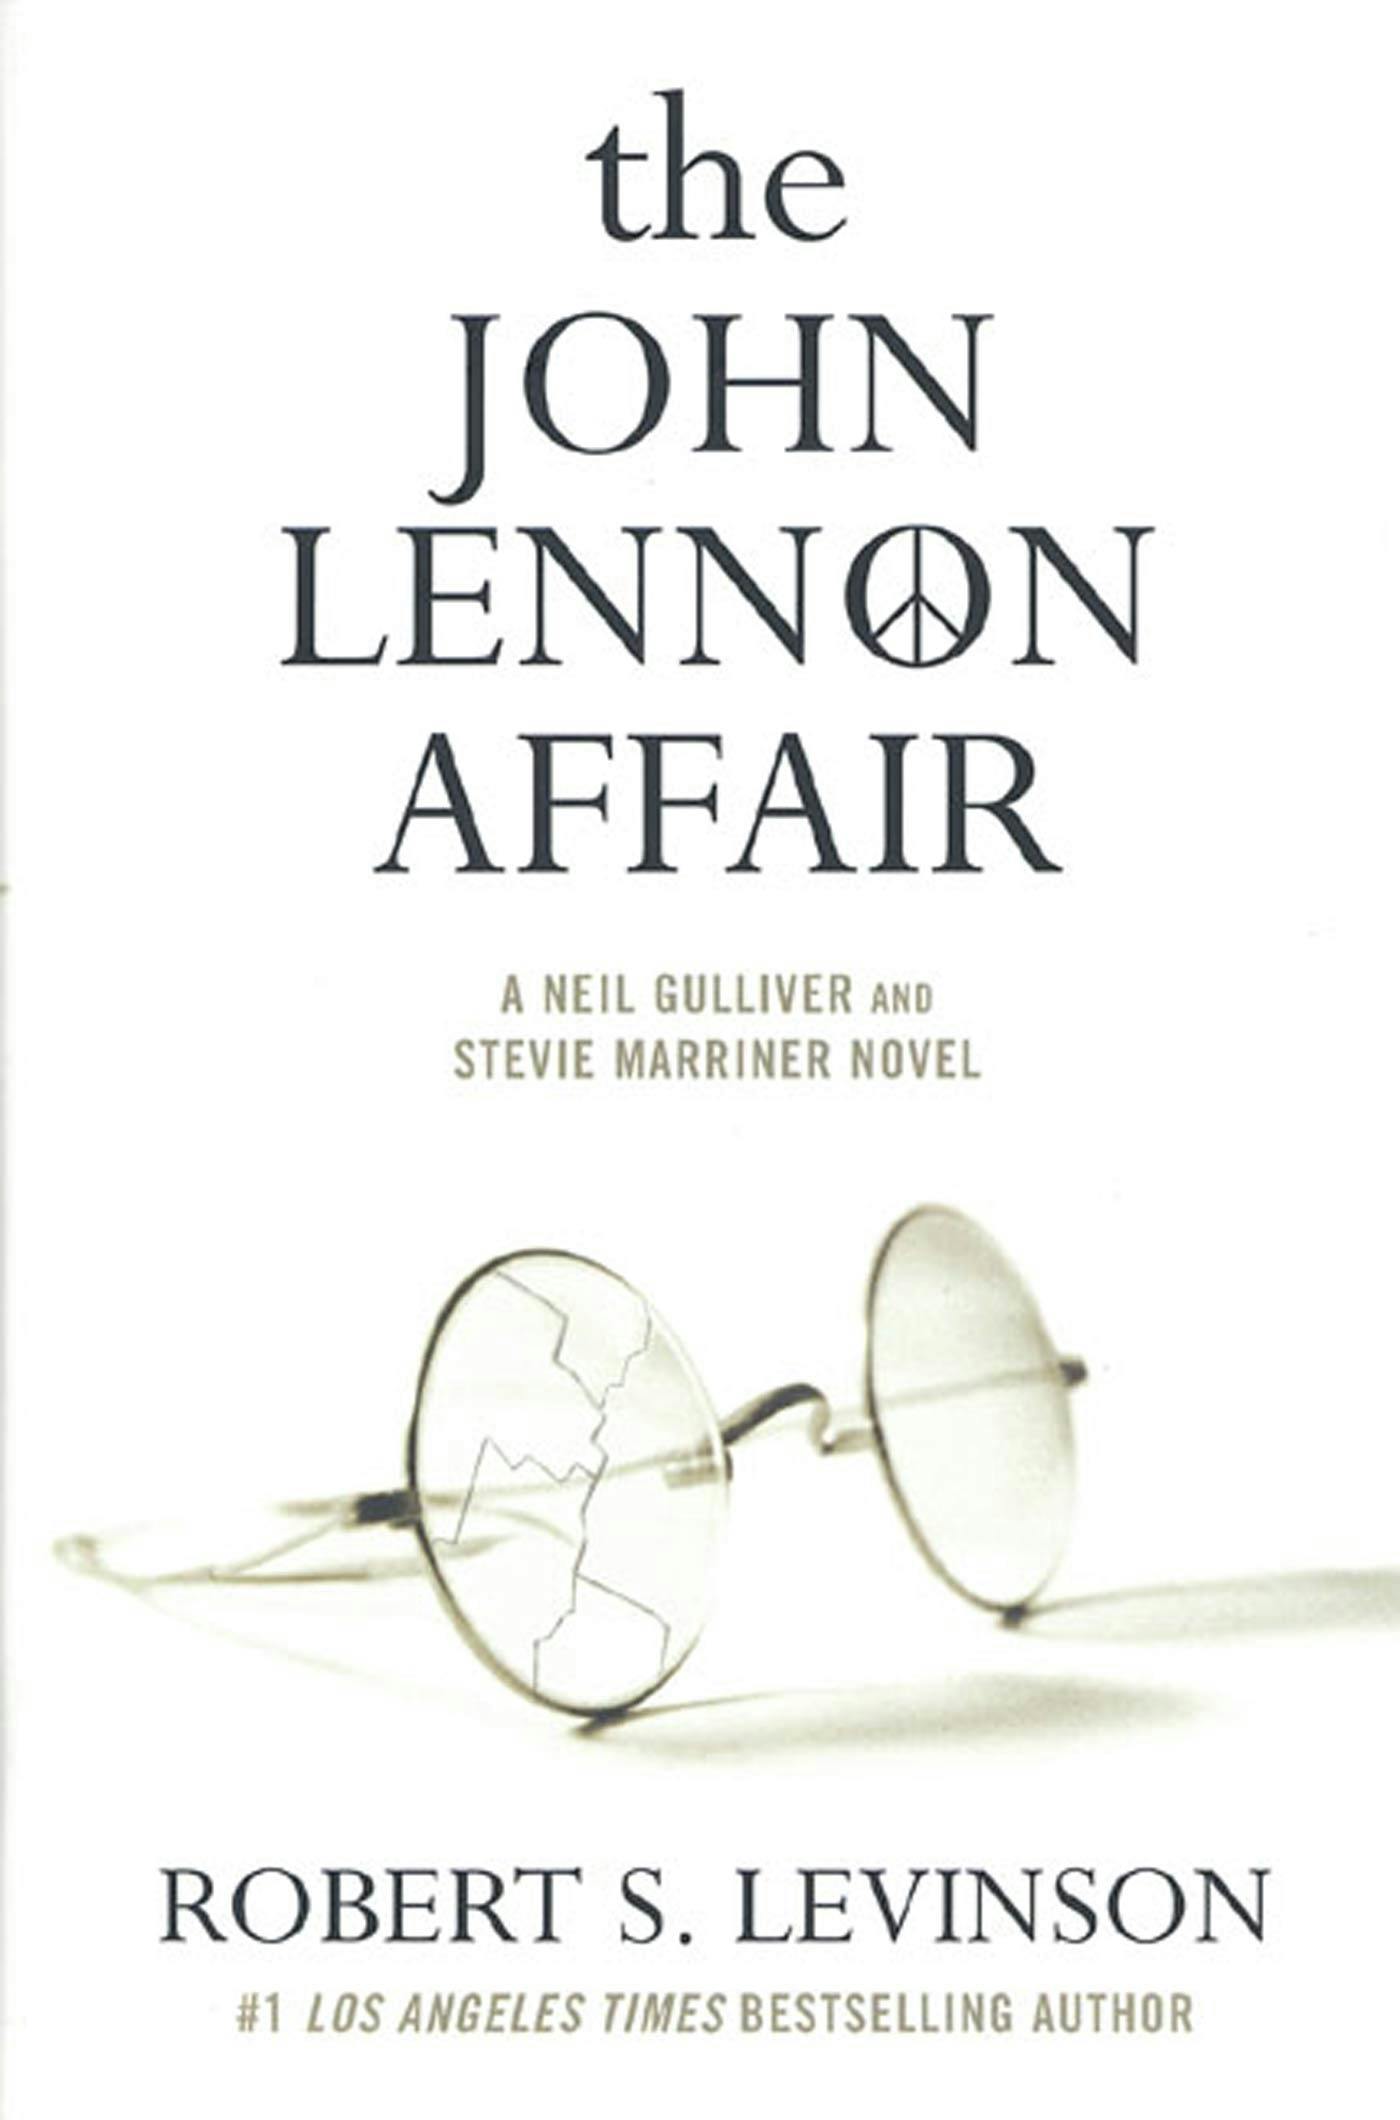 Cover for the book titled as: The John Lennon Affair